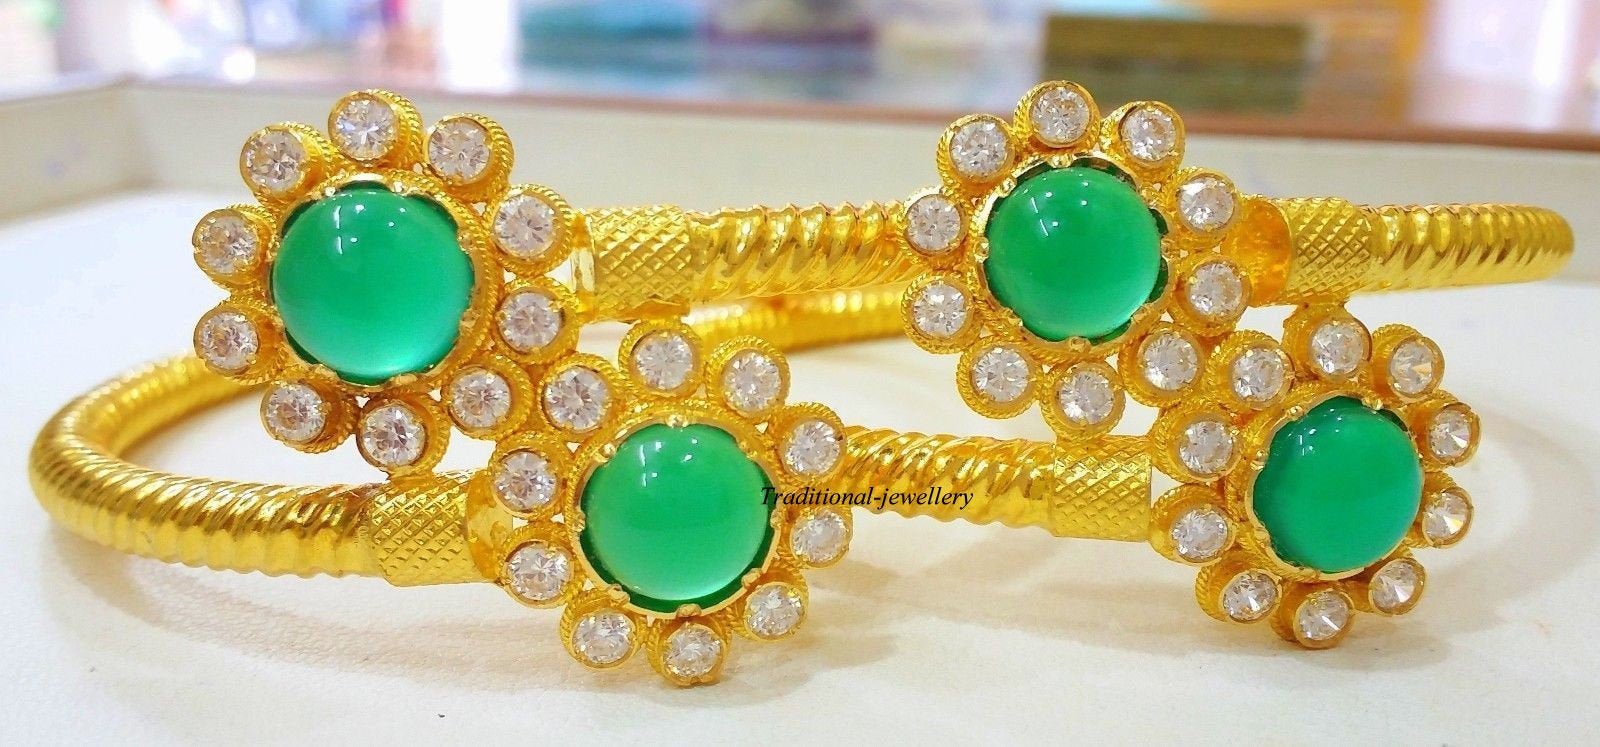 22k yellow gold handmade women's bangle bracelet kangan set with fabulous stone work traditional jewelry from Rajasthan India - TRIBAL ORNAMENTS